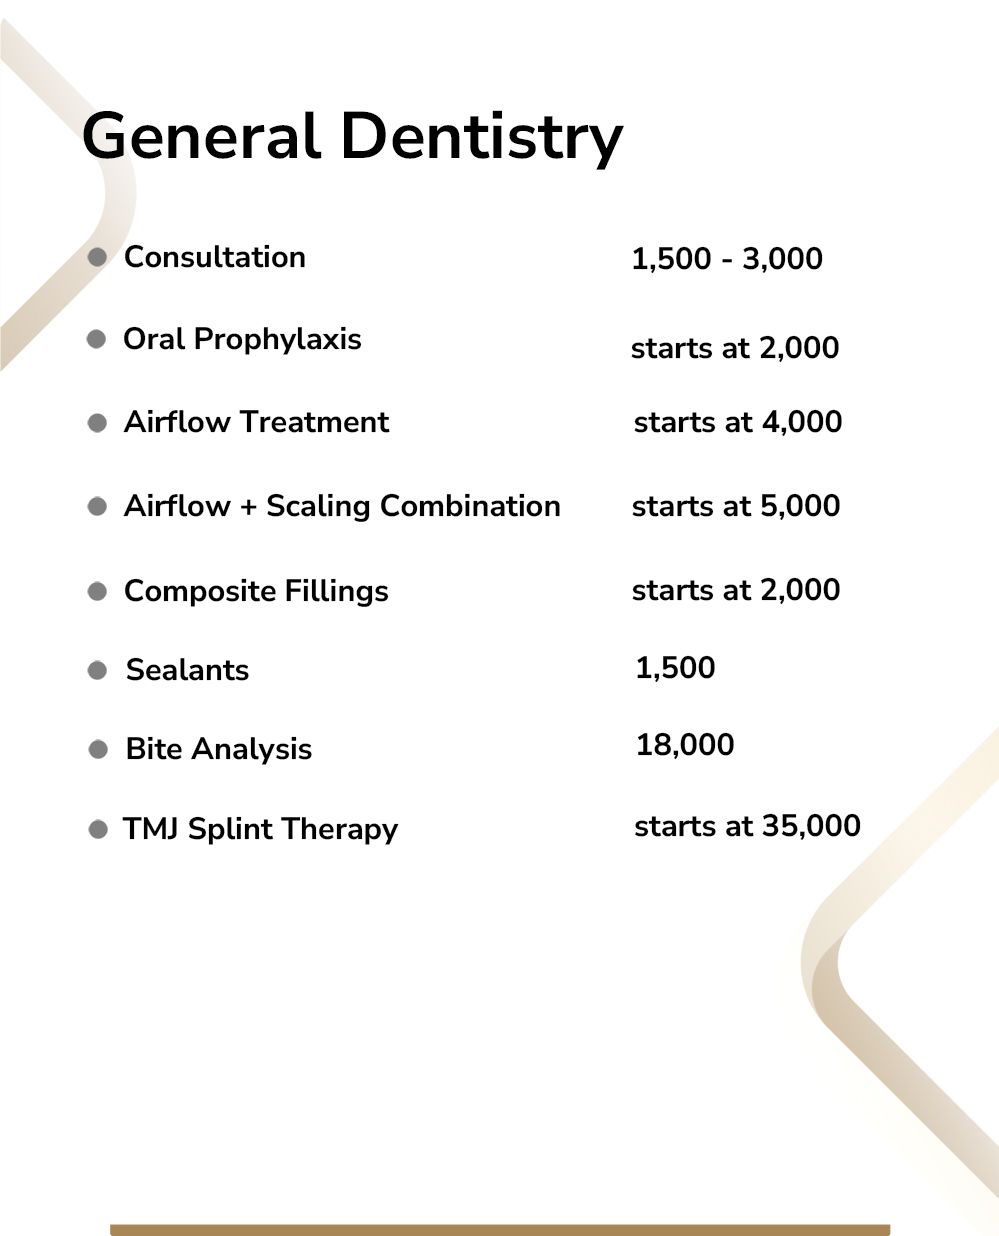 General Dentistry 2